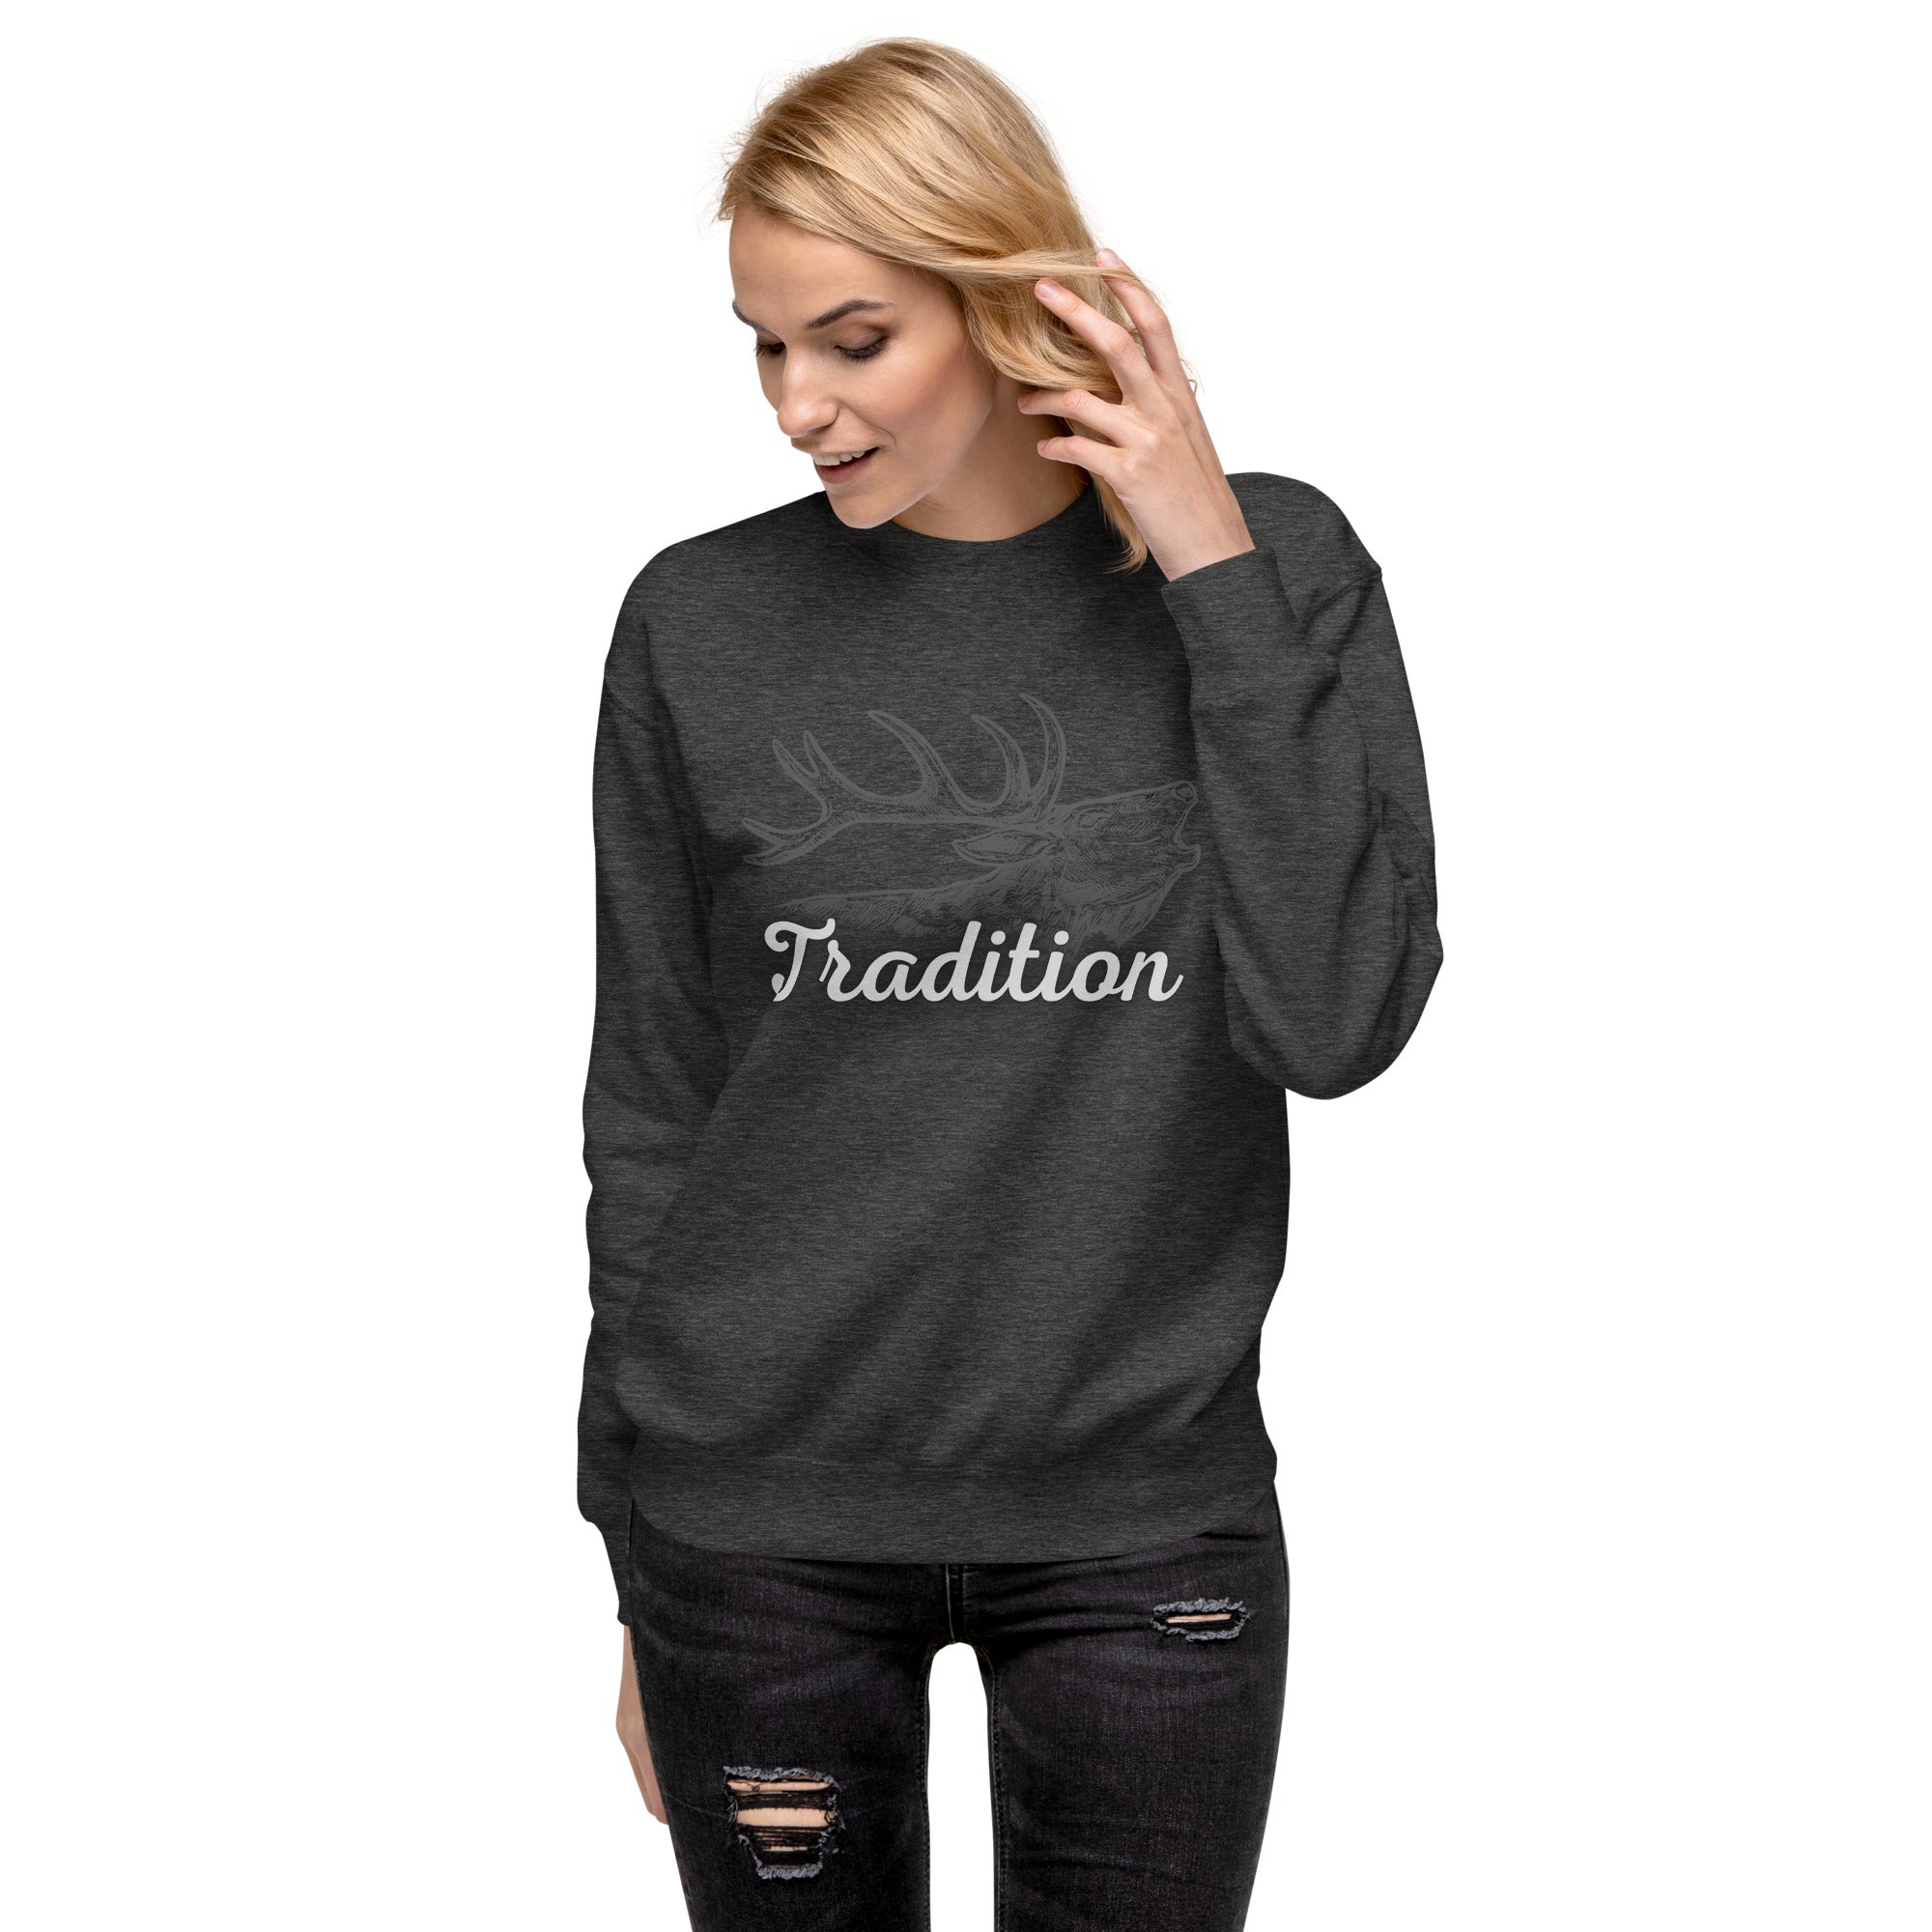 Tradition Women's Premium Sweatshirt